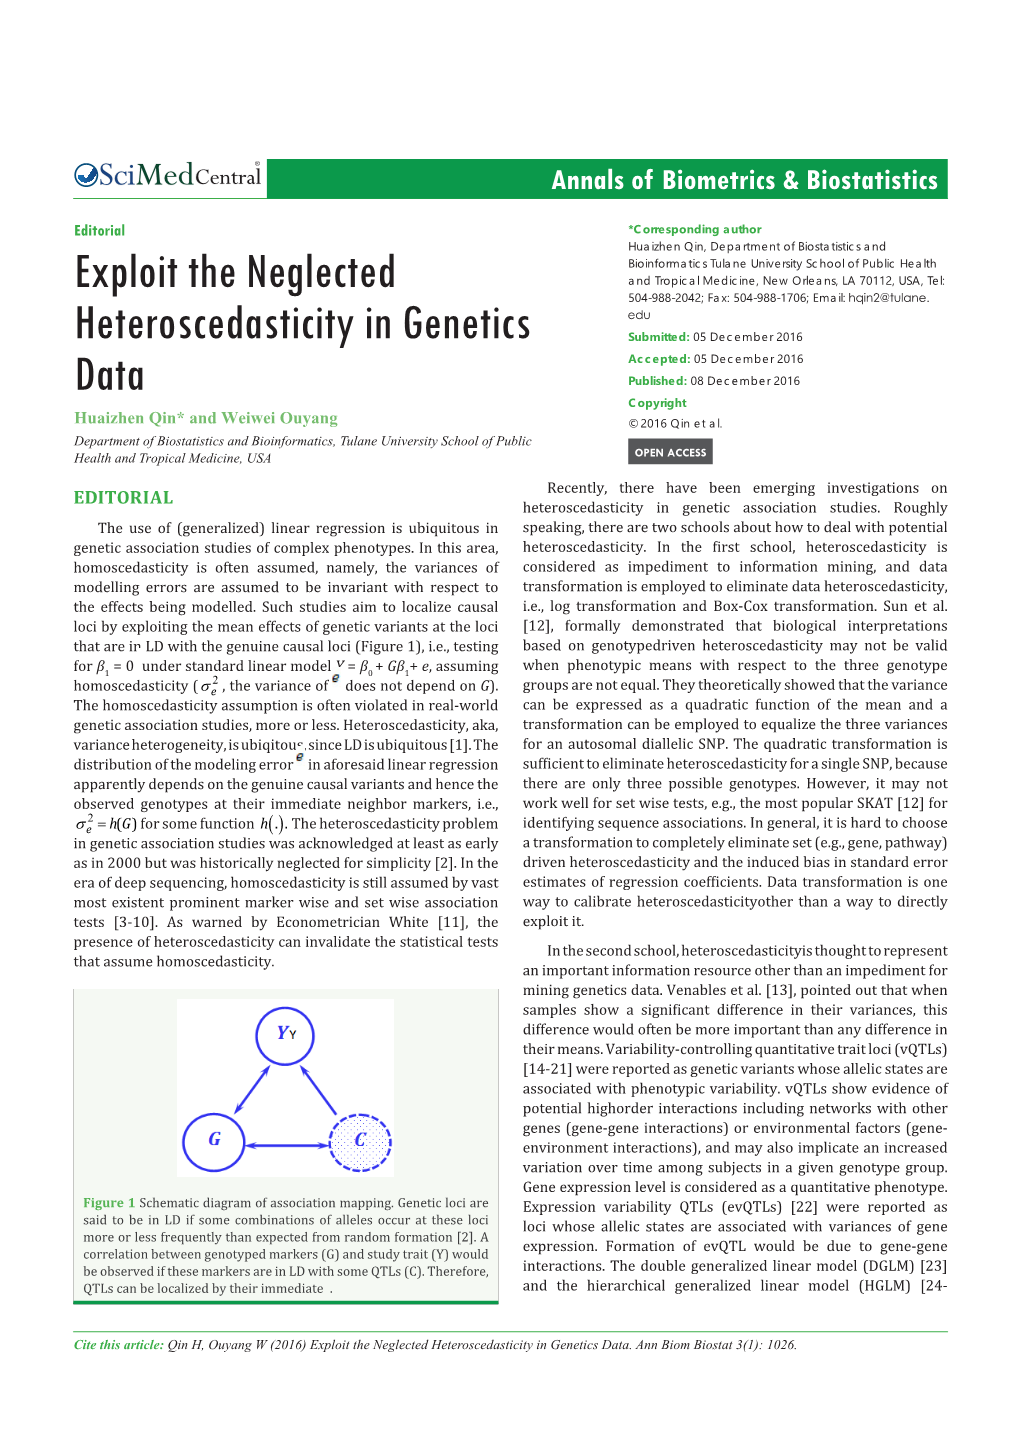 Exploit the Neglected Heteroscedasticity in Genetics Data